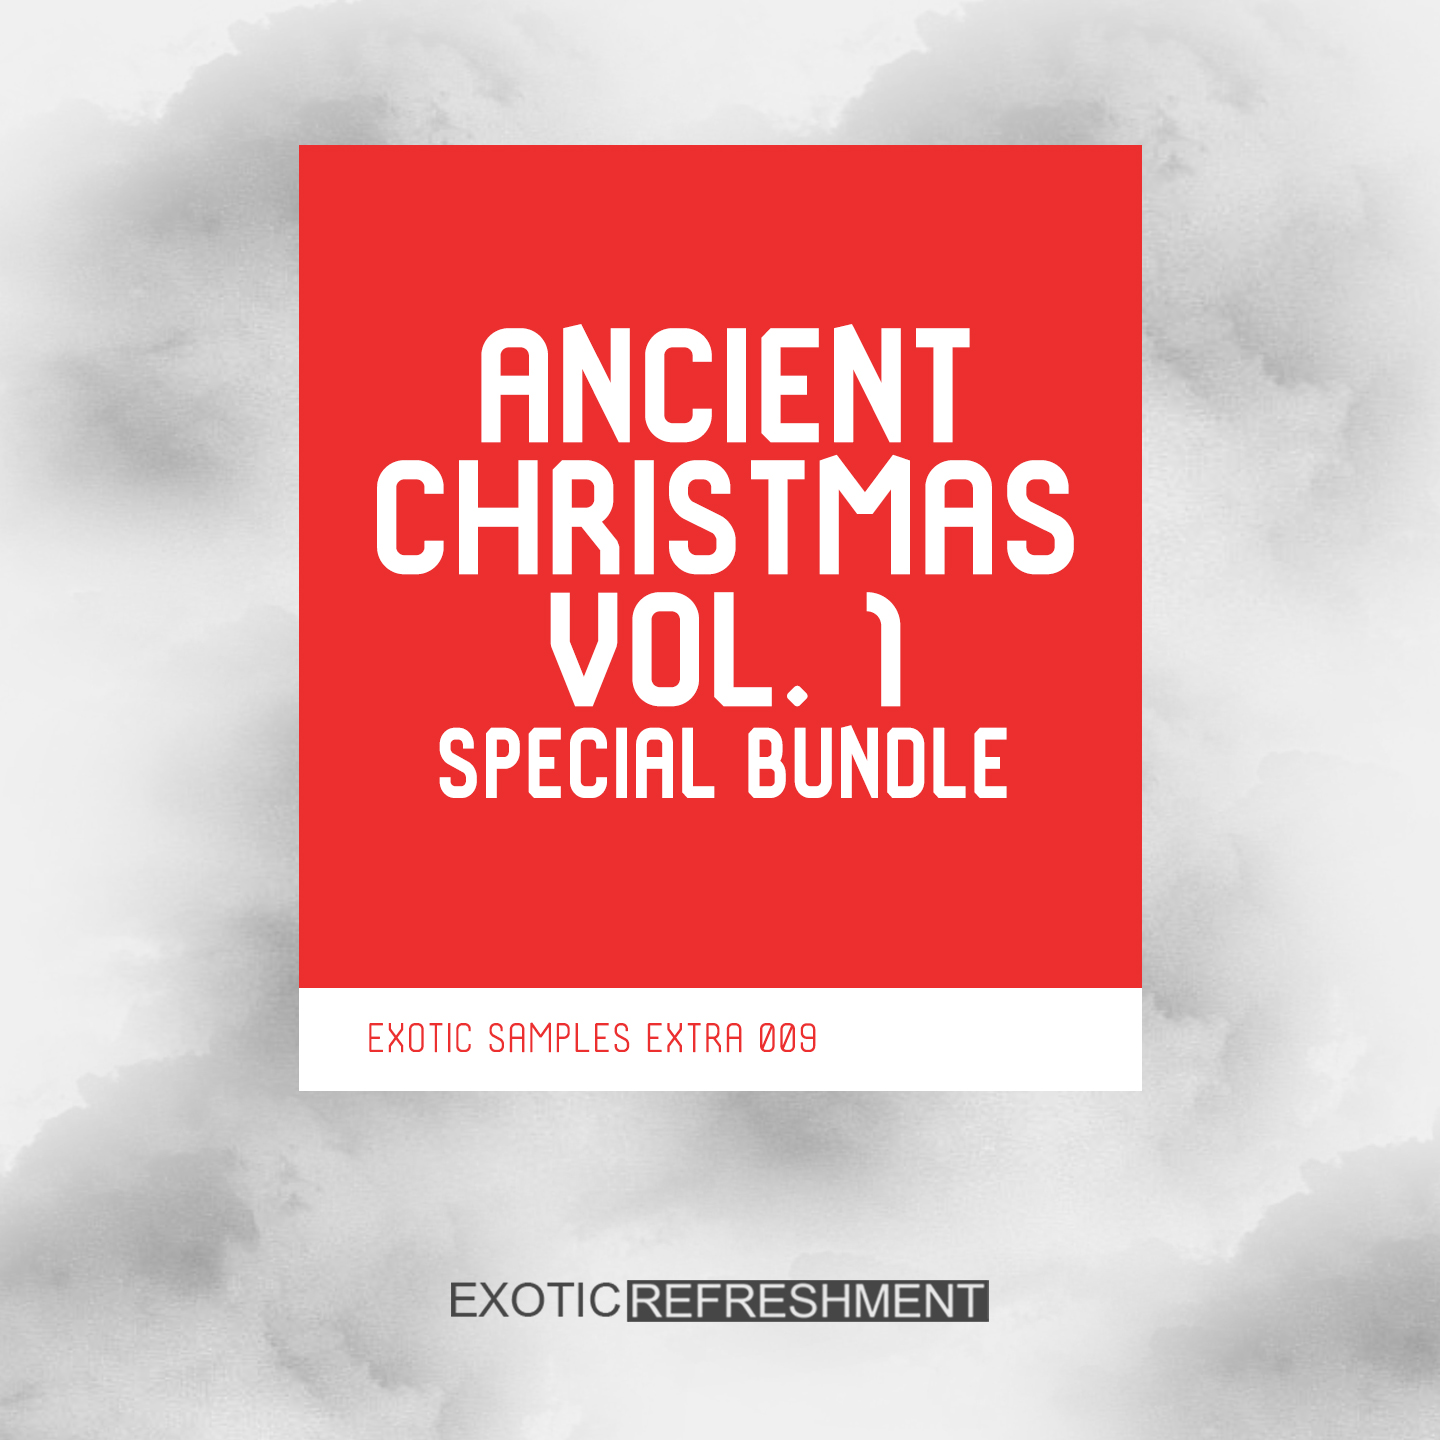 Ancient Christmas vol. 1